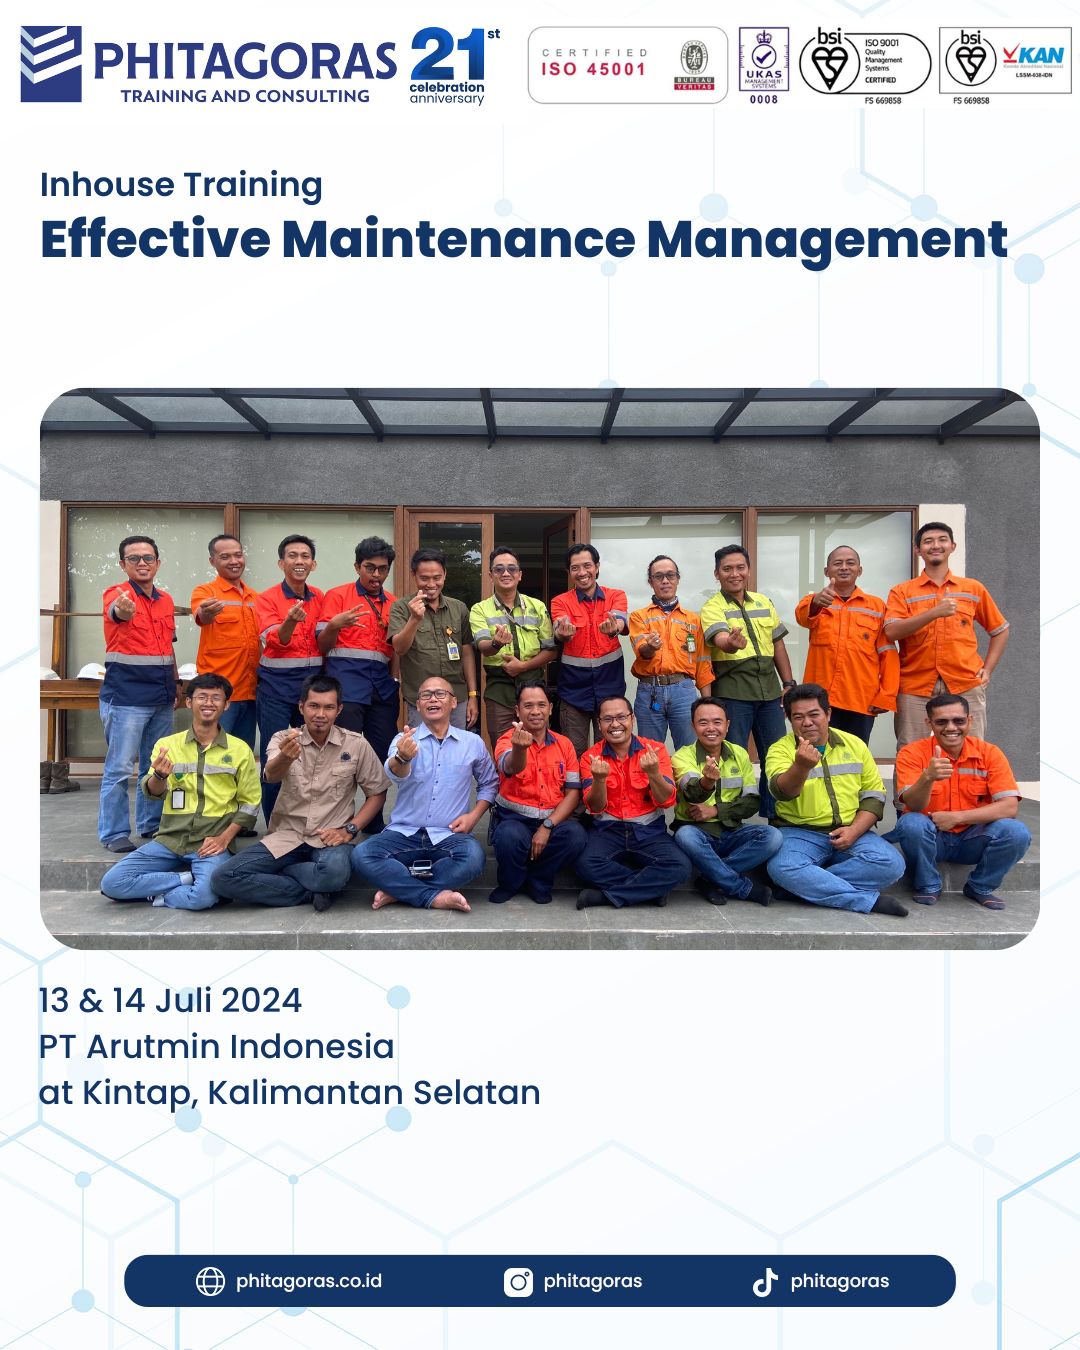 Inhouse Training Effective Maintenance Management - PT Arutmin Indonesia